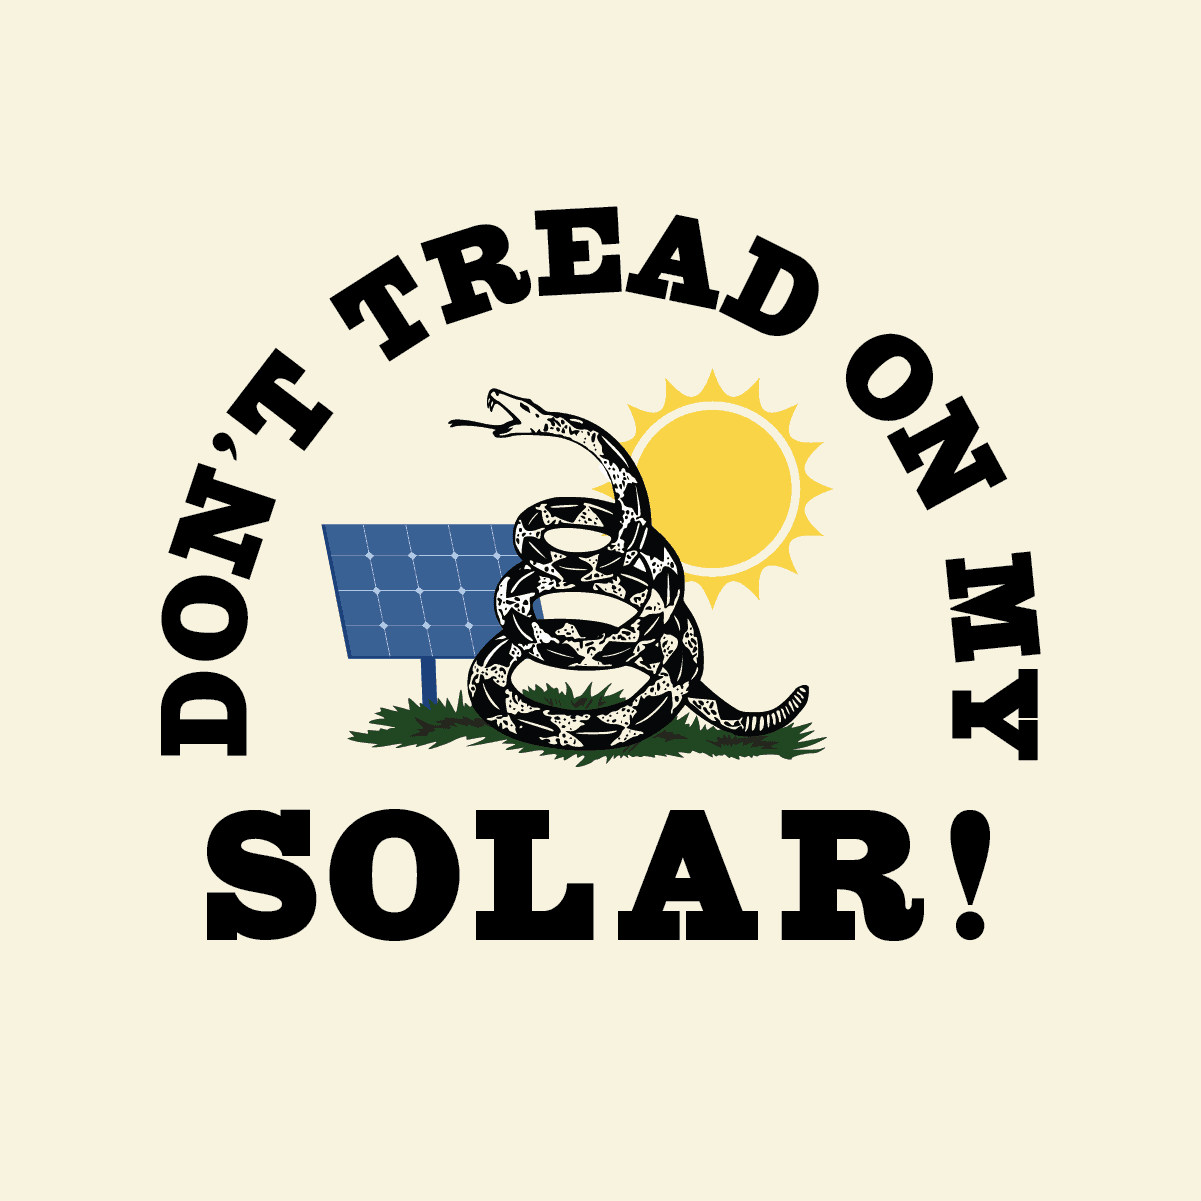 Don't tread on my solar logo